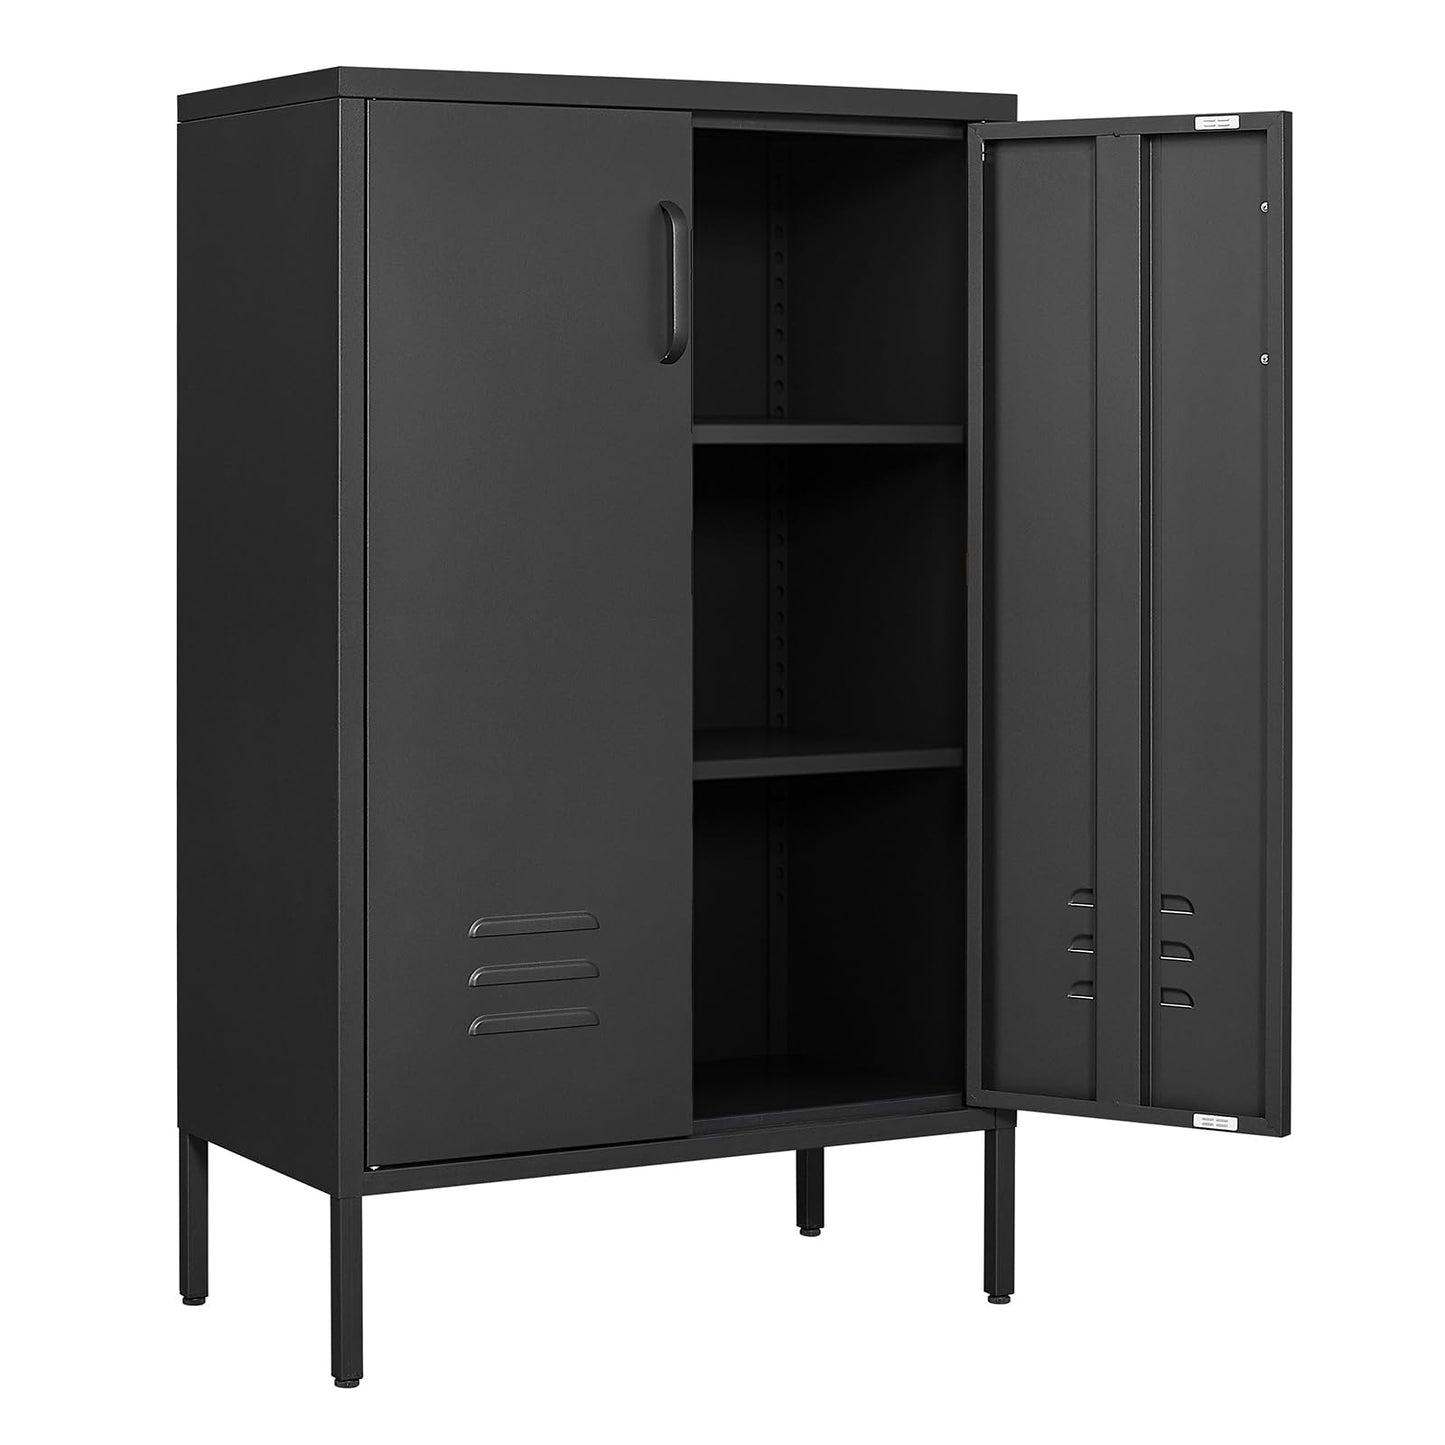 GREATMEET Metal Storage Cabinet, Multipurpose Storage Rack, 2 Door Metal Cabinets, Bathroom Freestanding Storage Cabinet with 2 Adjustable Shelves